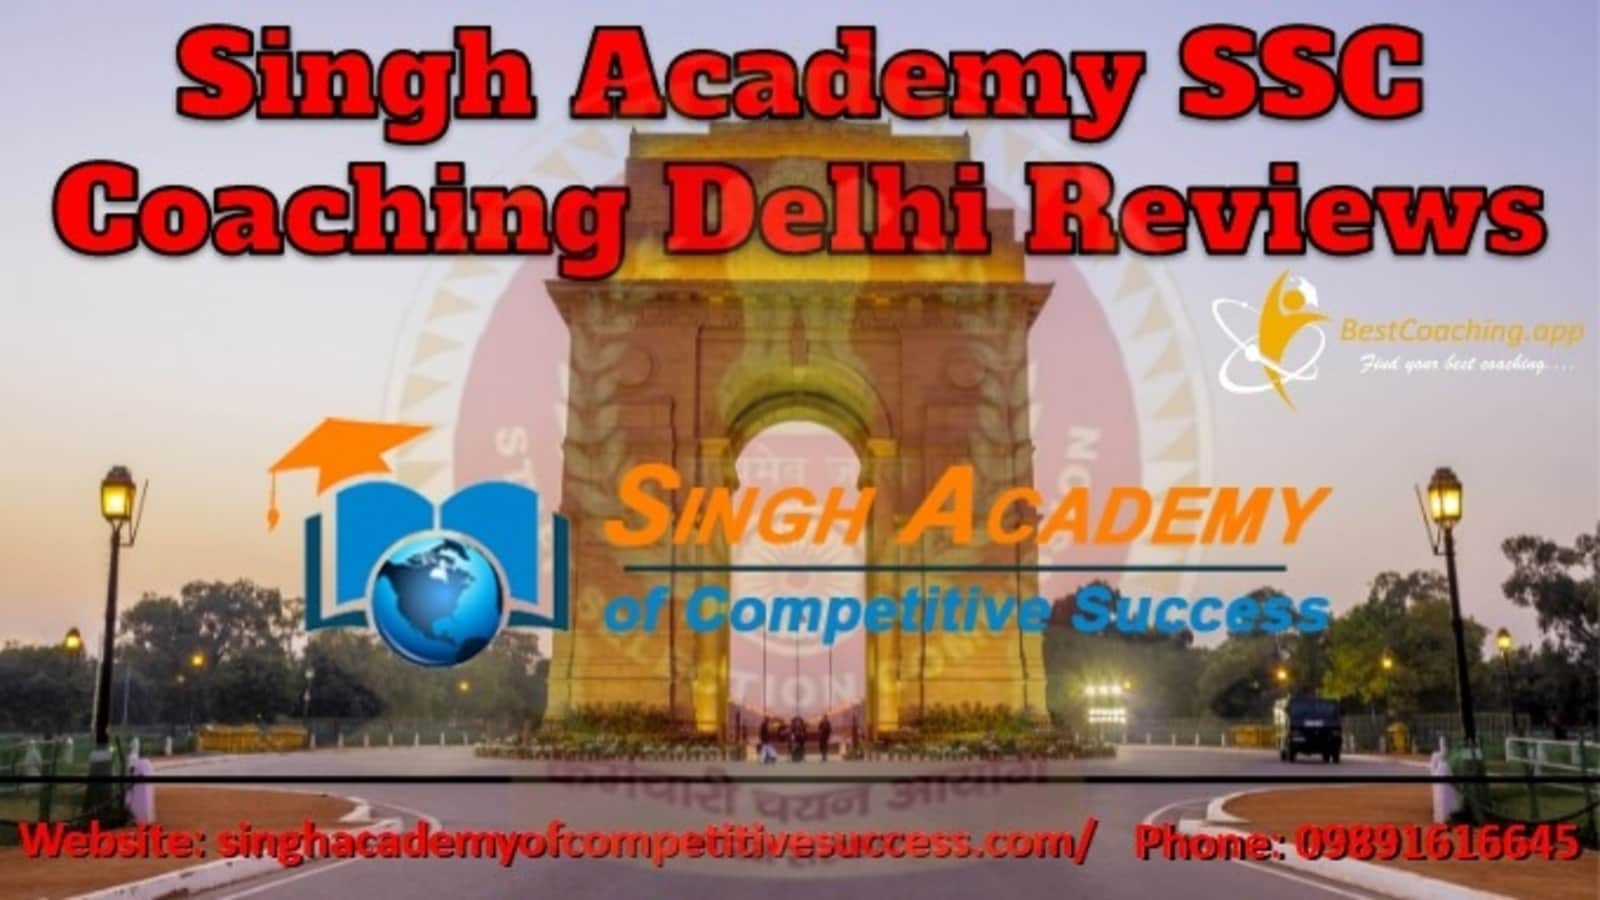 Singh Academy SSC Coaching in Delhi